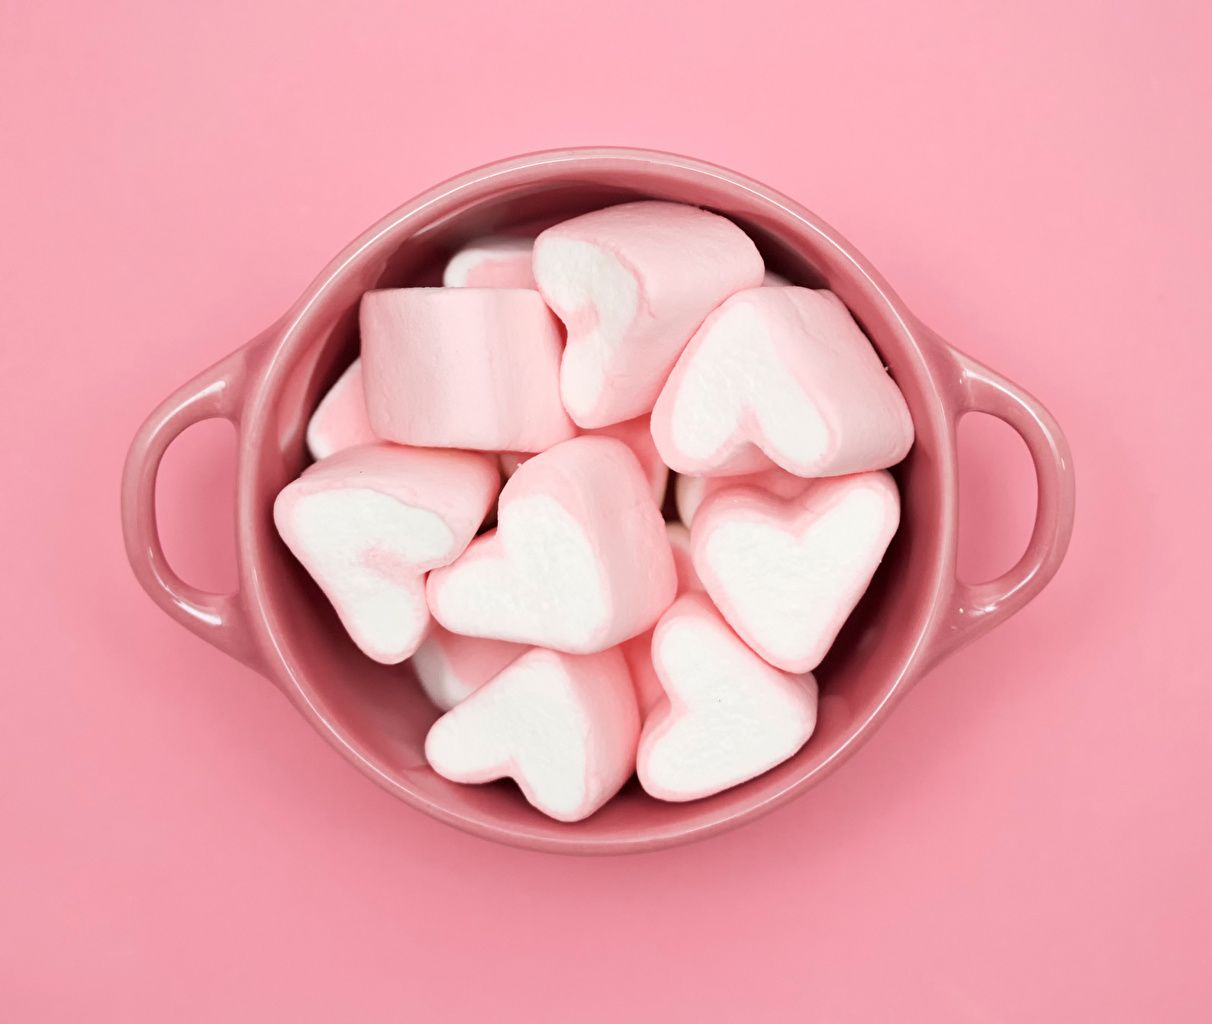  Süßigkeiten Hintergrundbild 1212x1024. Fotos Herz Bonbon Rosa Farbe Tasse Lebensmittel hautnah Süßware